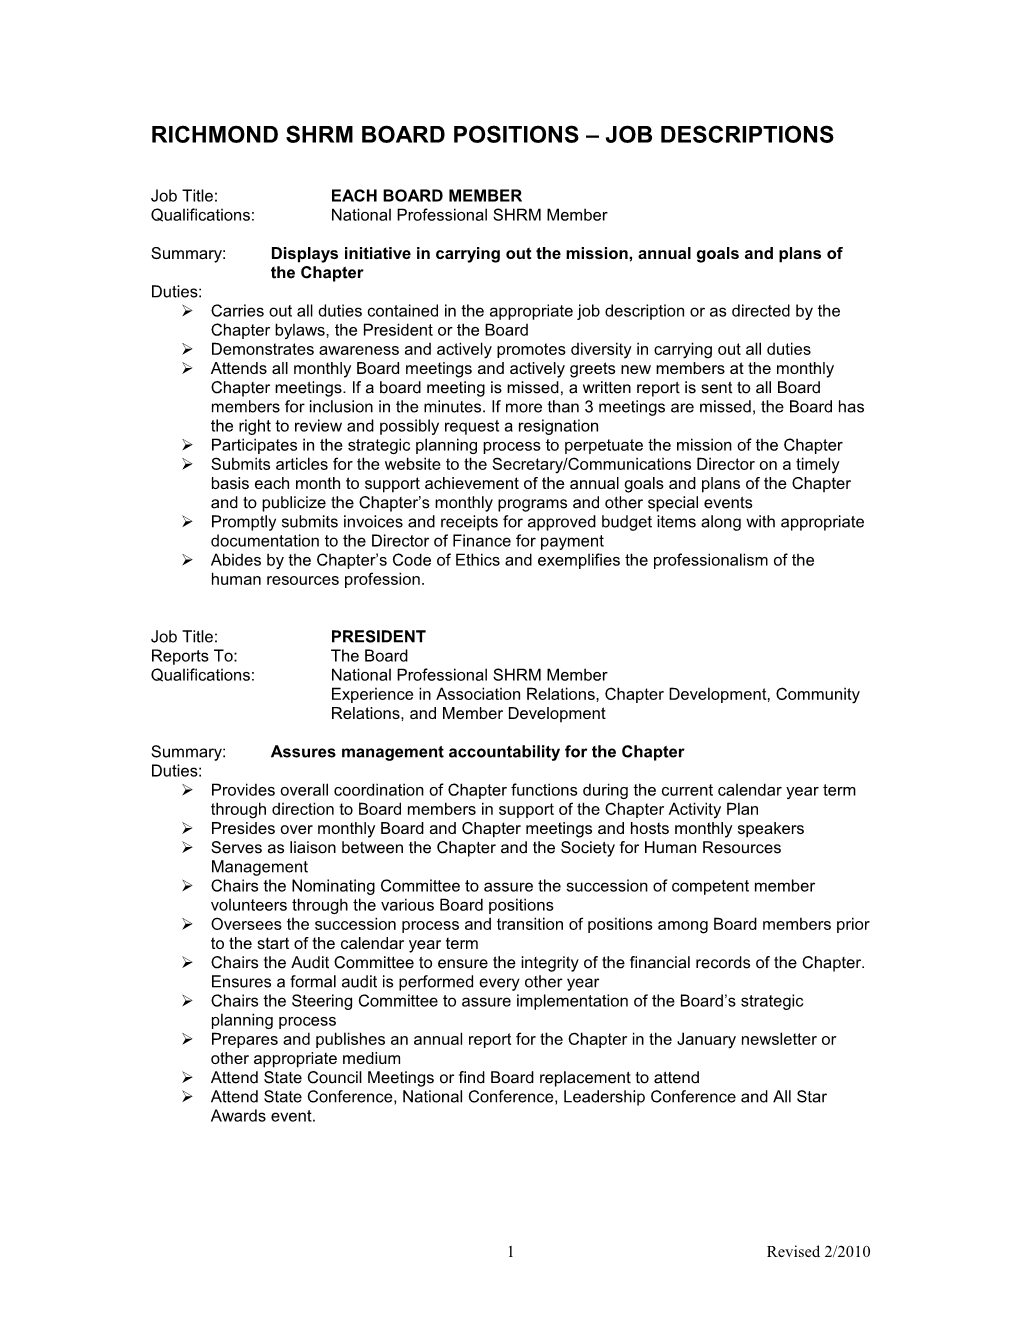 Richmond Shrm Board Positions Job Descriptions